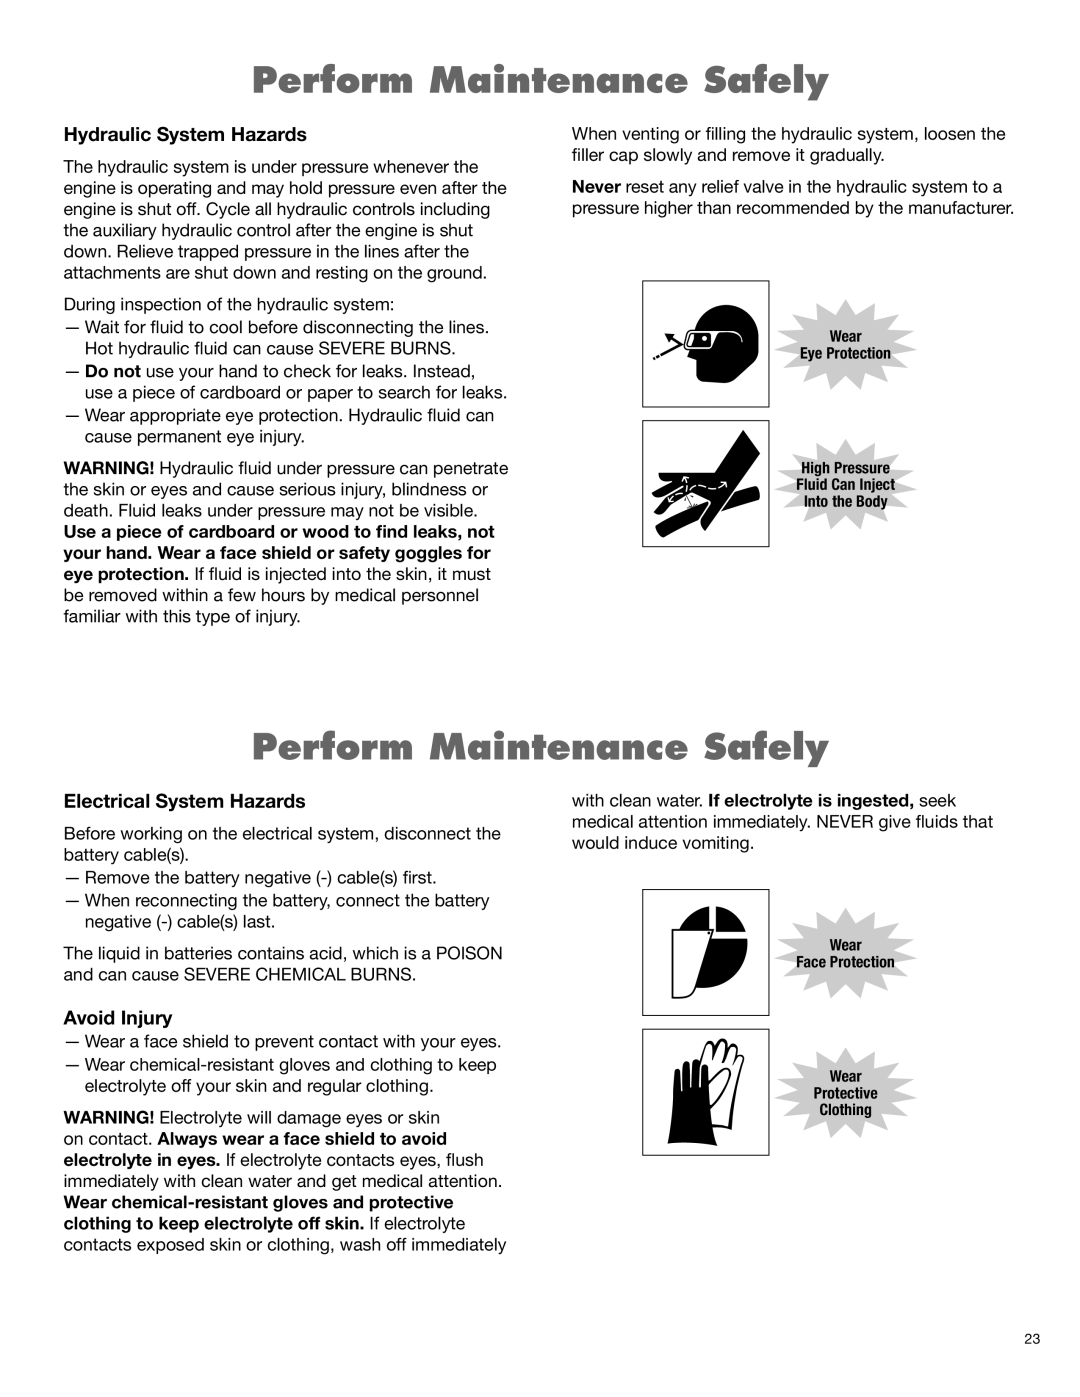 Alamo 1900 manual Perform Maintenance Safely, Hydraulic System Hazards, Electrical System Hazards, Avoid Injury 